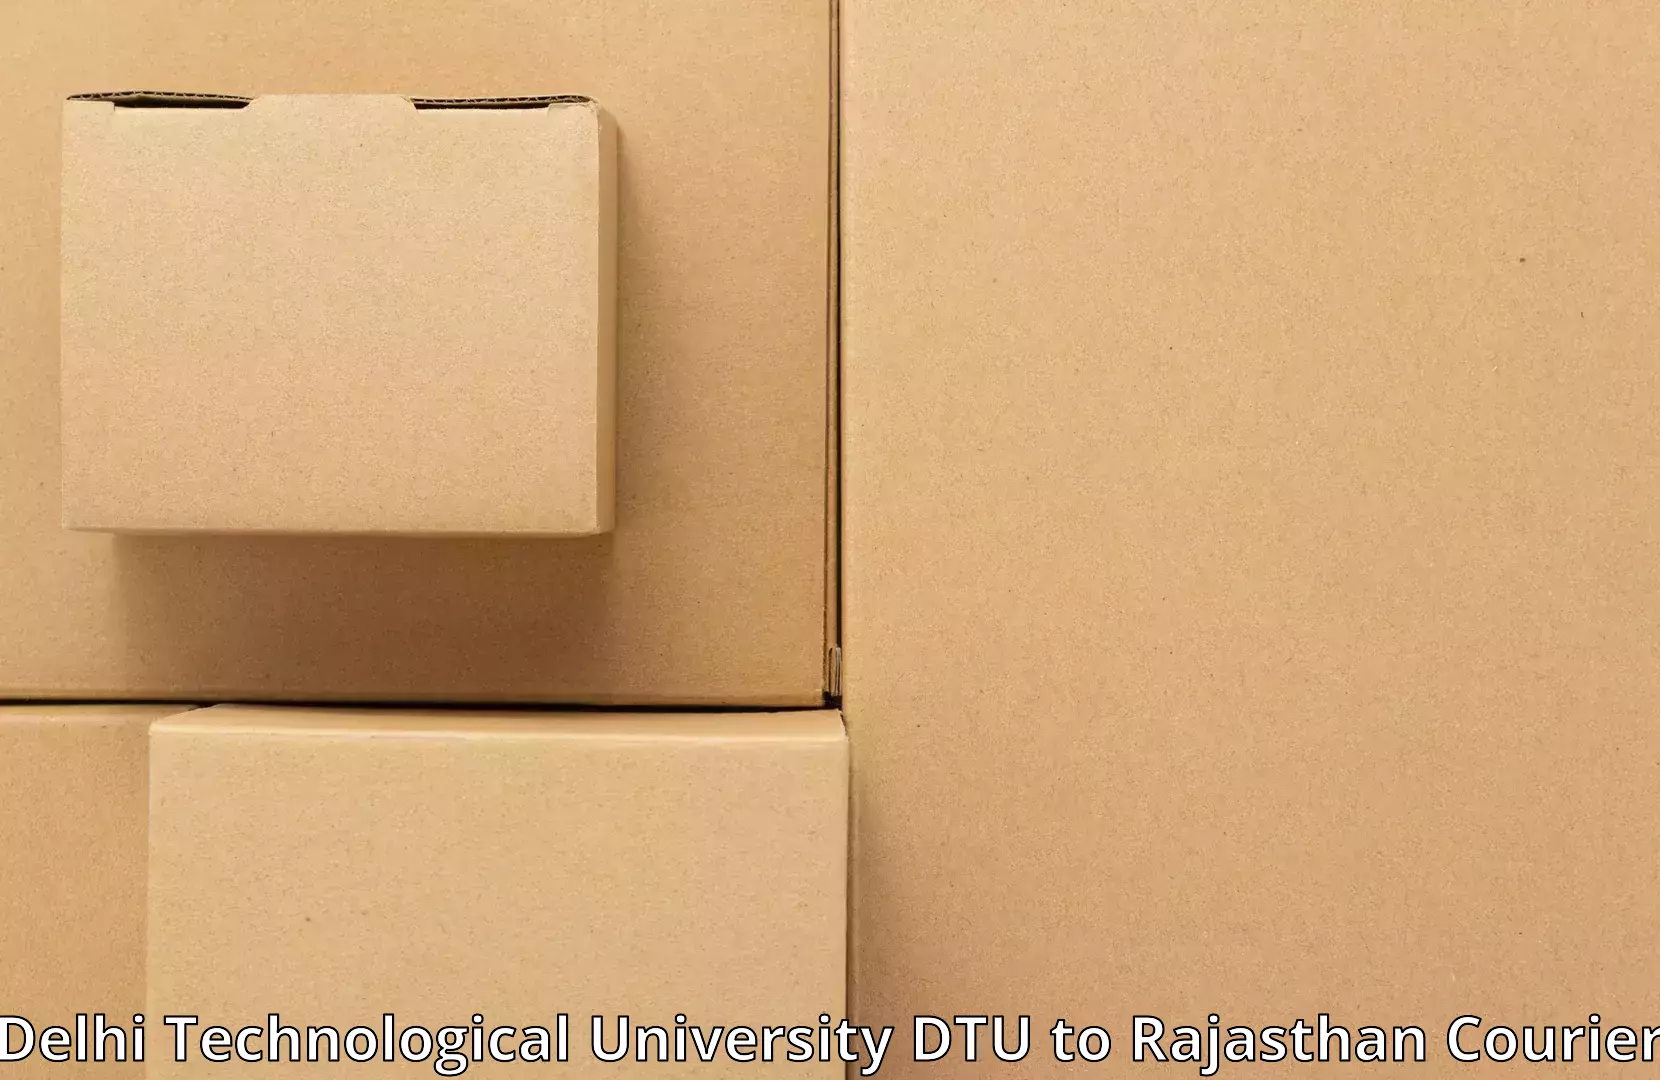 Furniture delivery service Delhi Technological University DTU to Deenwa